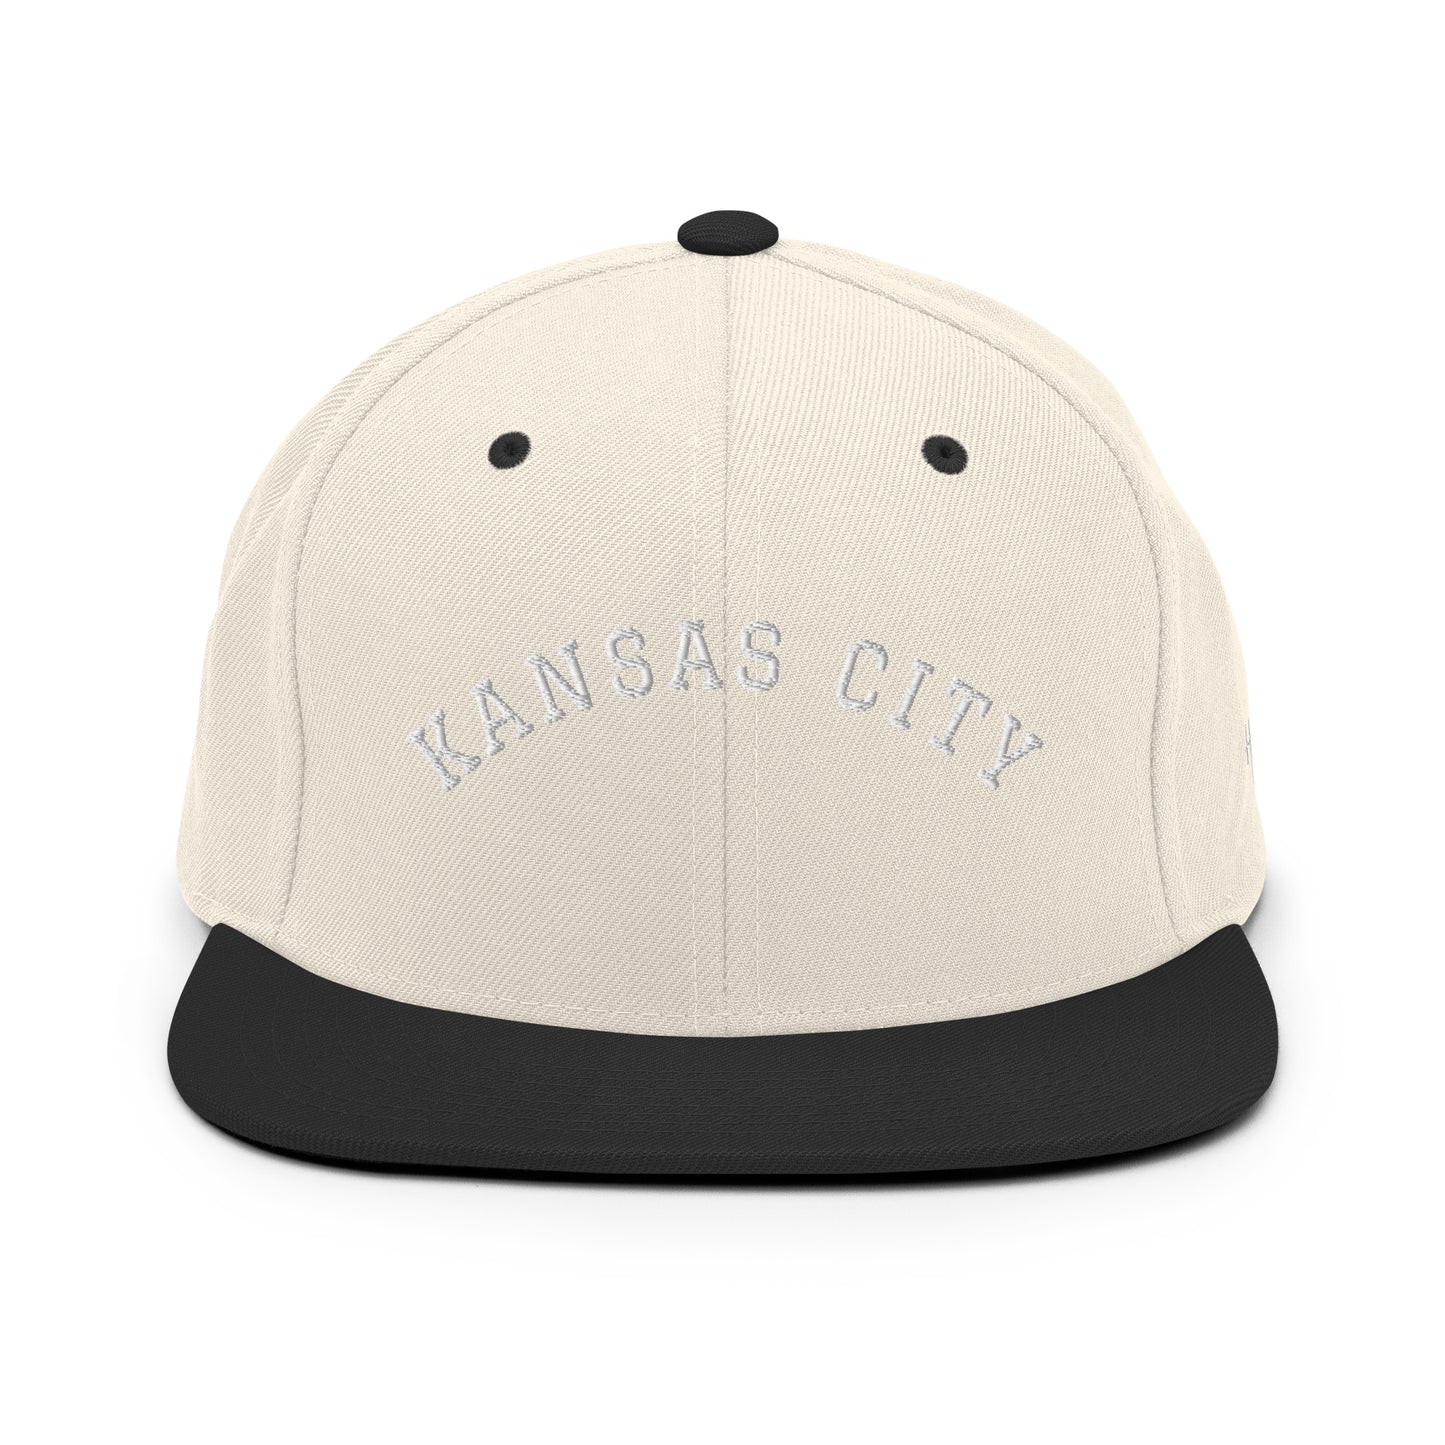 Kansas City Arch 6 Panel Snapback Hat